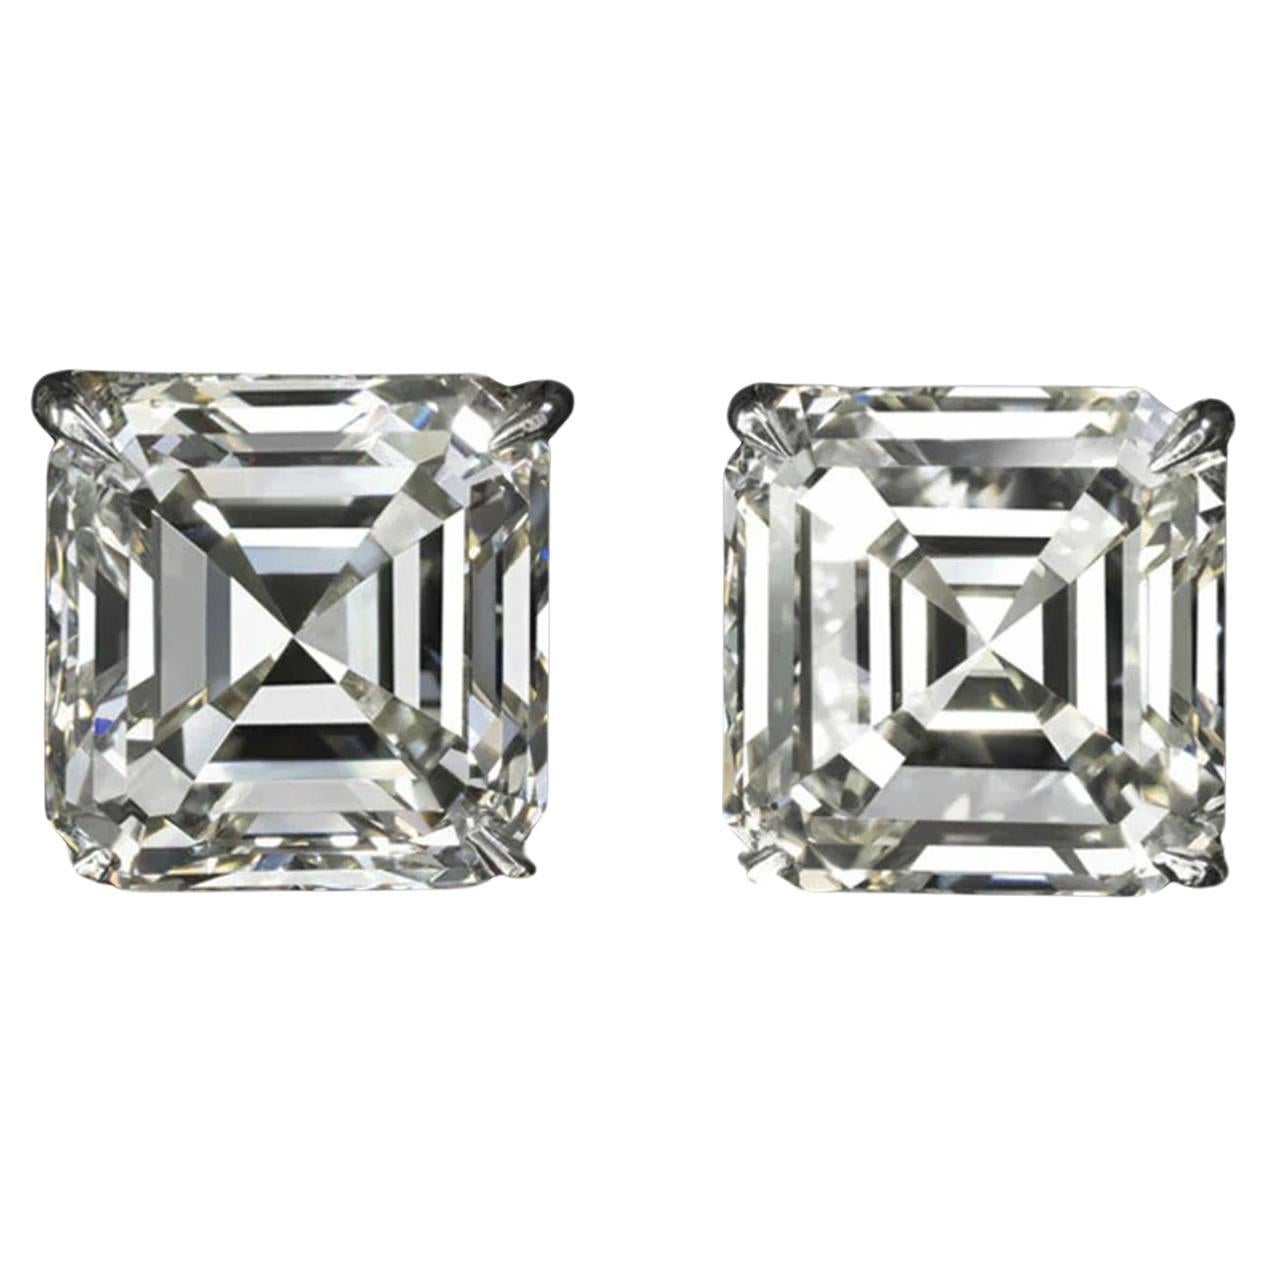 Exceptional GIA Certified 8.04 Carat Asscher Cut Diamond Studs For Sale